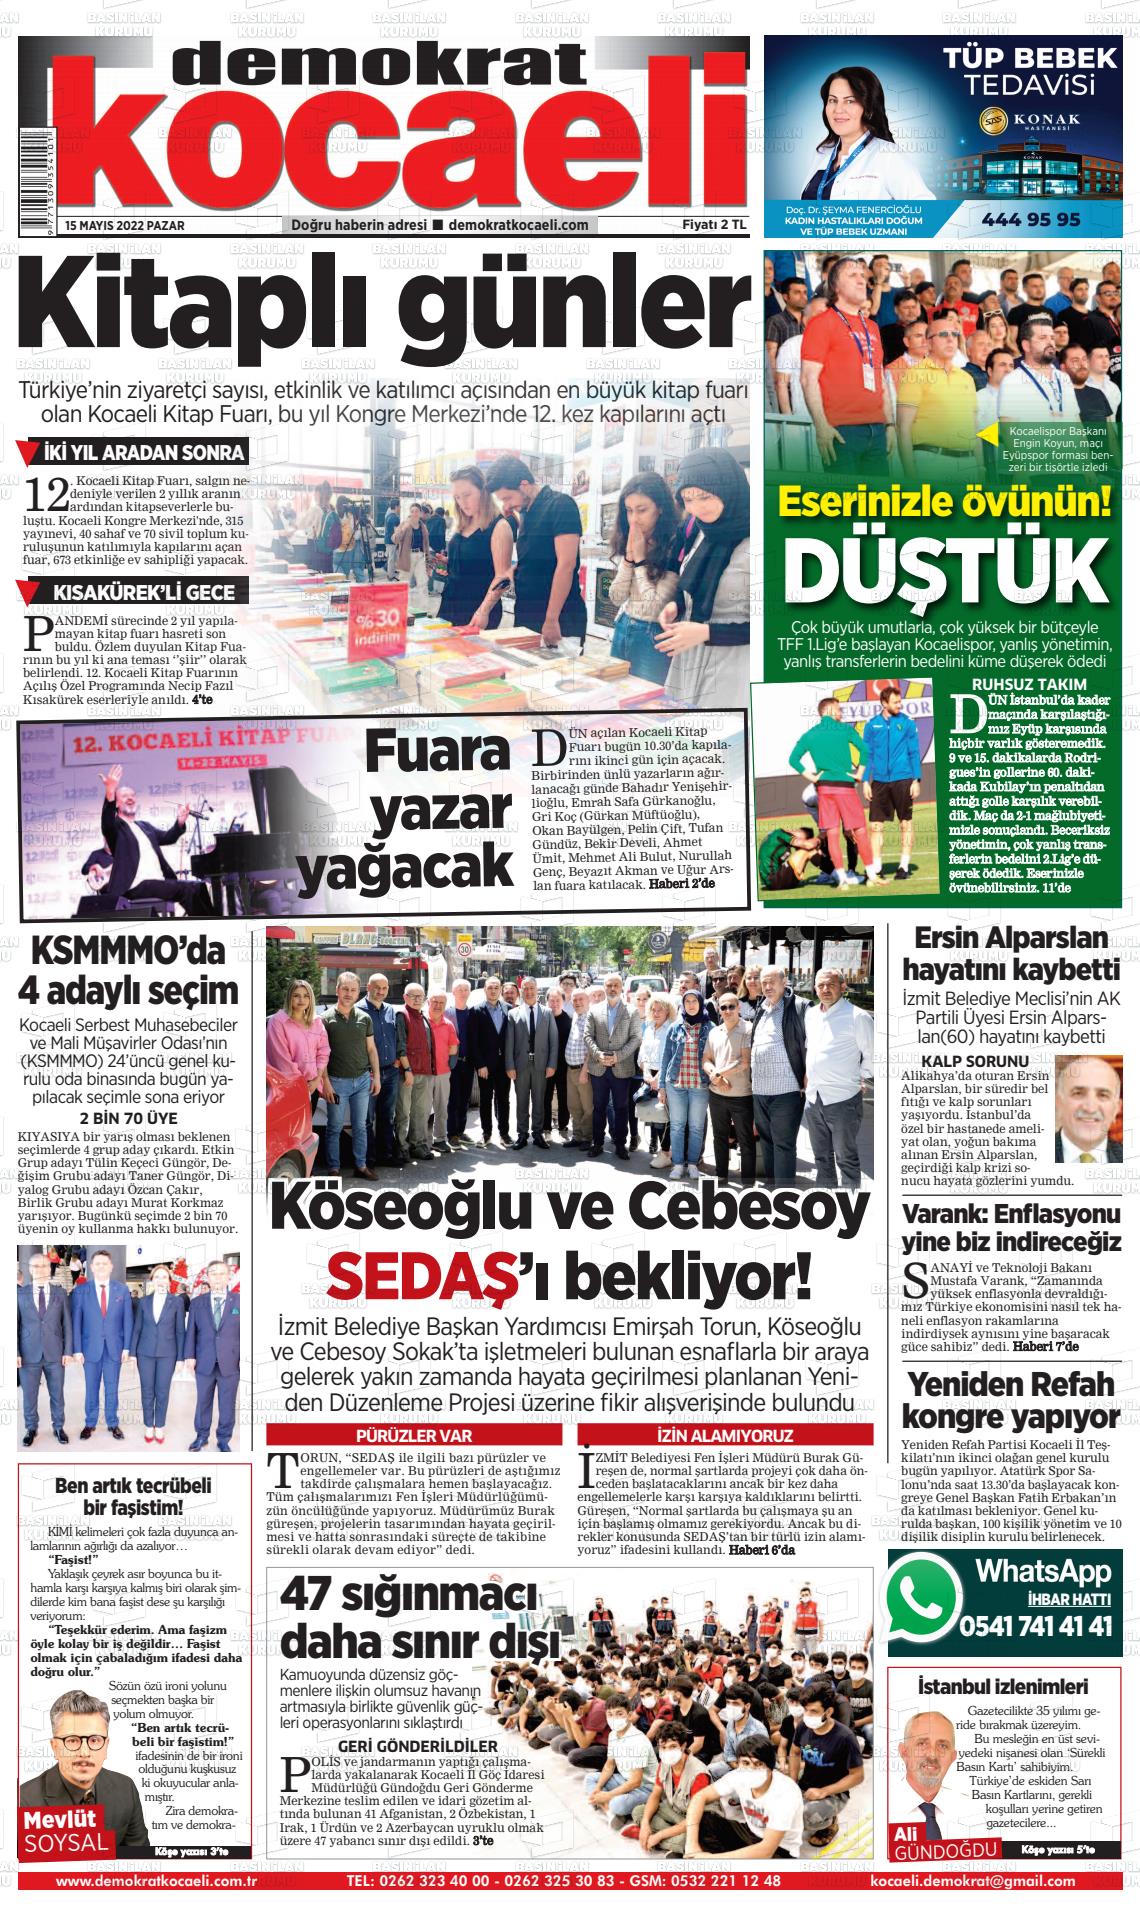 15 Mayıs 2022 Demokrat Kocaeli Gazete Manşeti